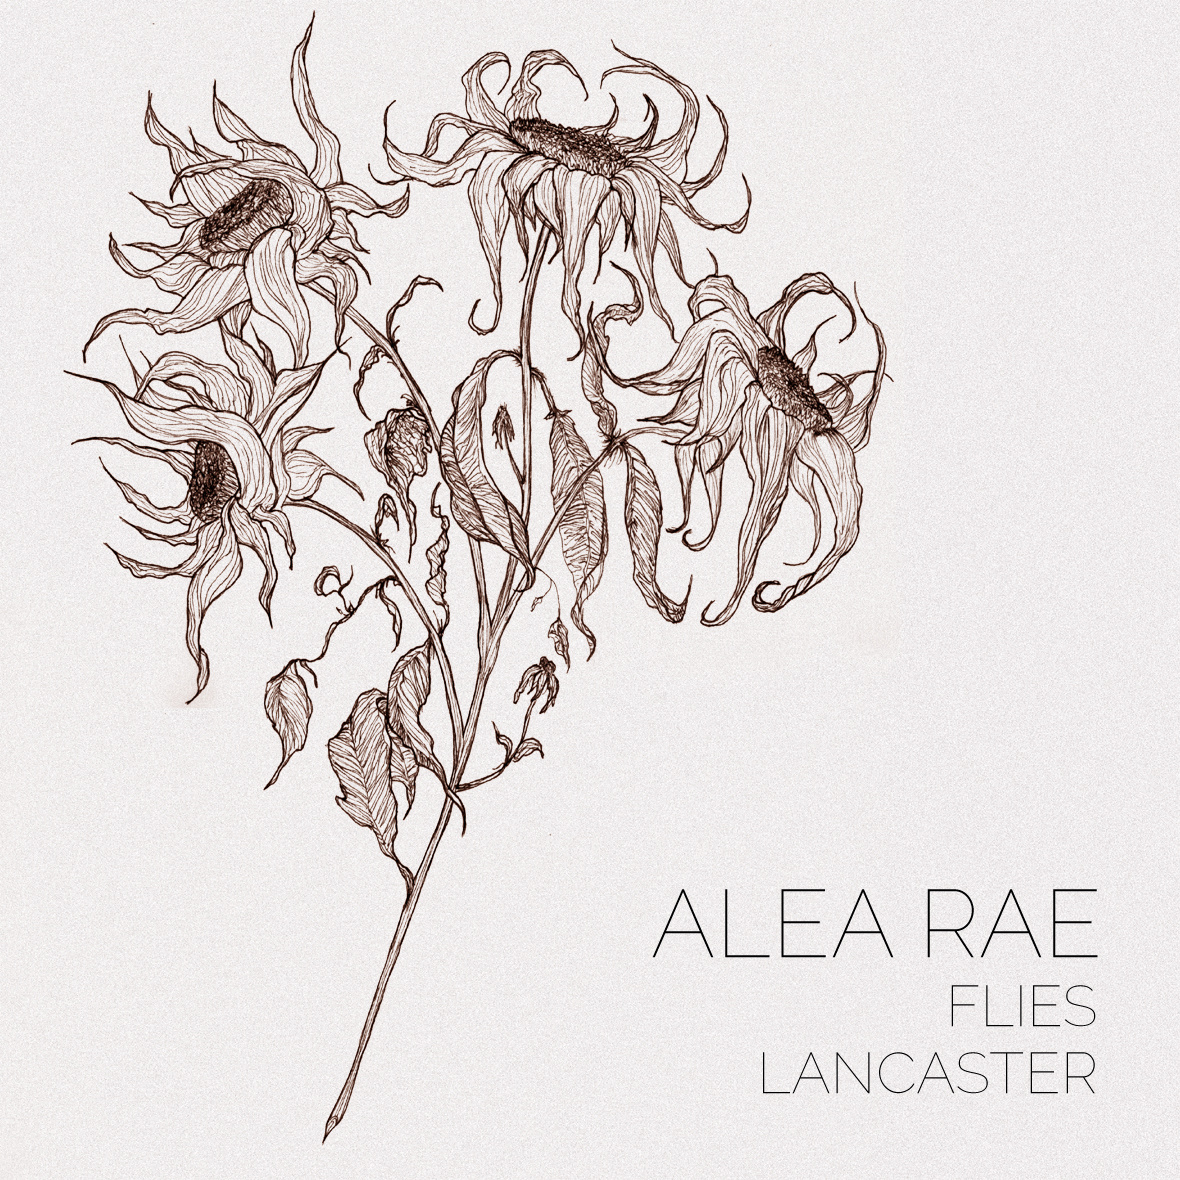 Folk band Alea Rae has humble roots and high hopes